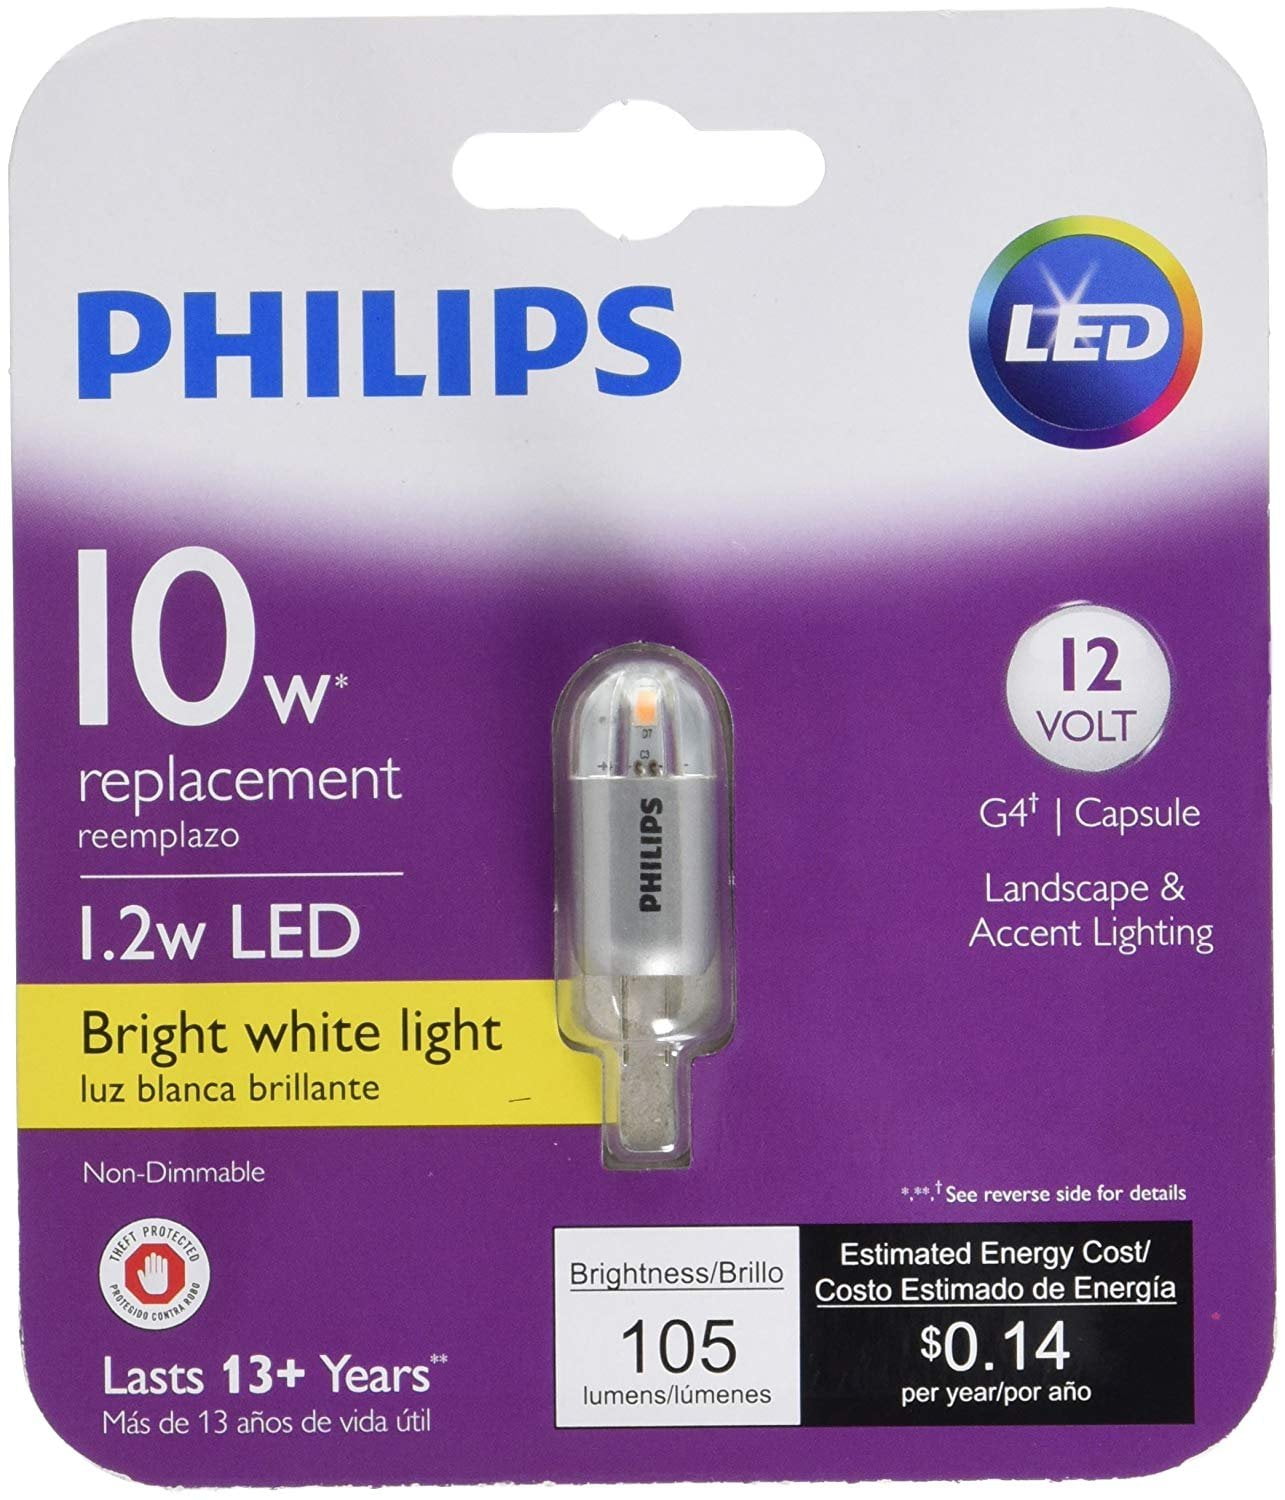 vil gøre filter lava Philips 458497 10W Equivalent LED 12V Capsule Light Bulb - Walmart.com